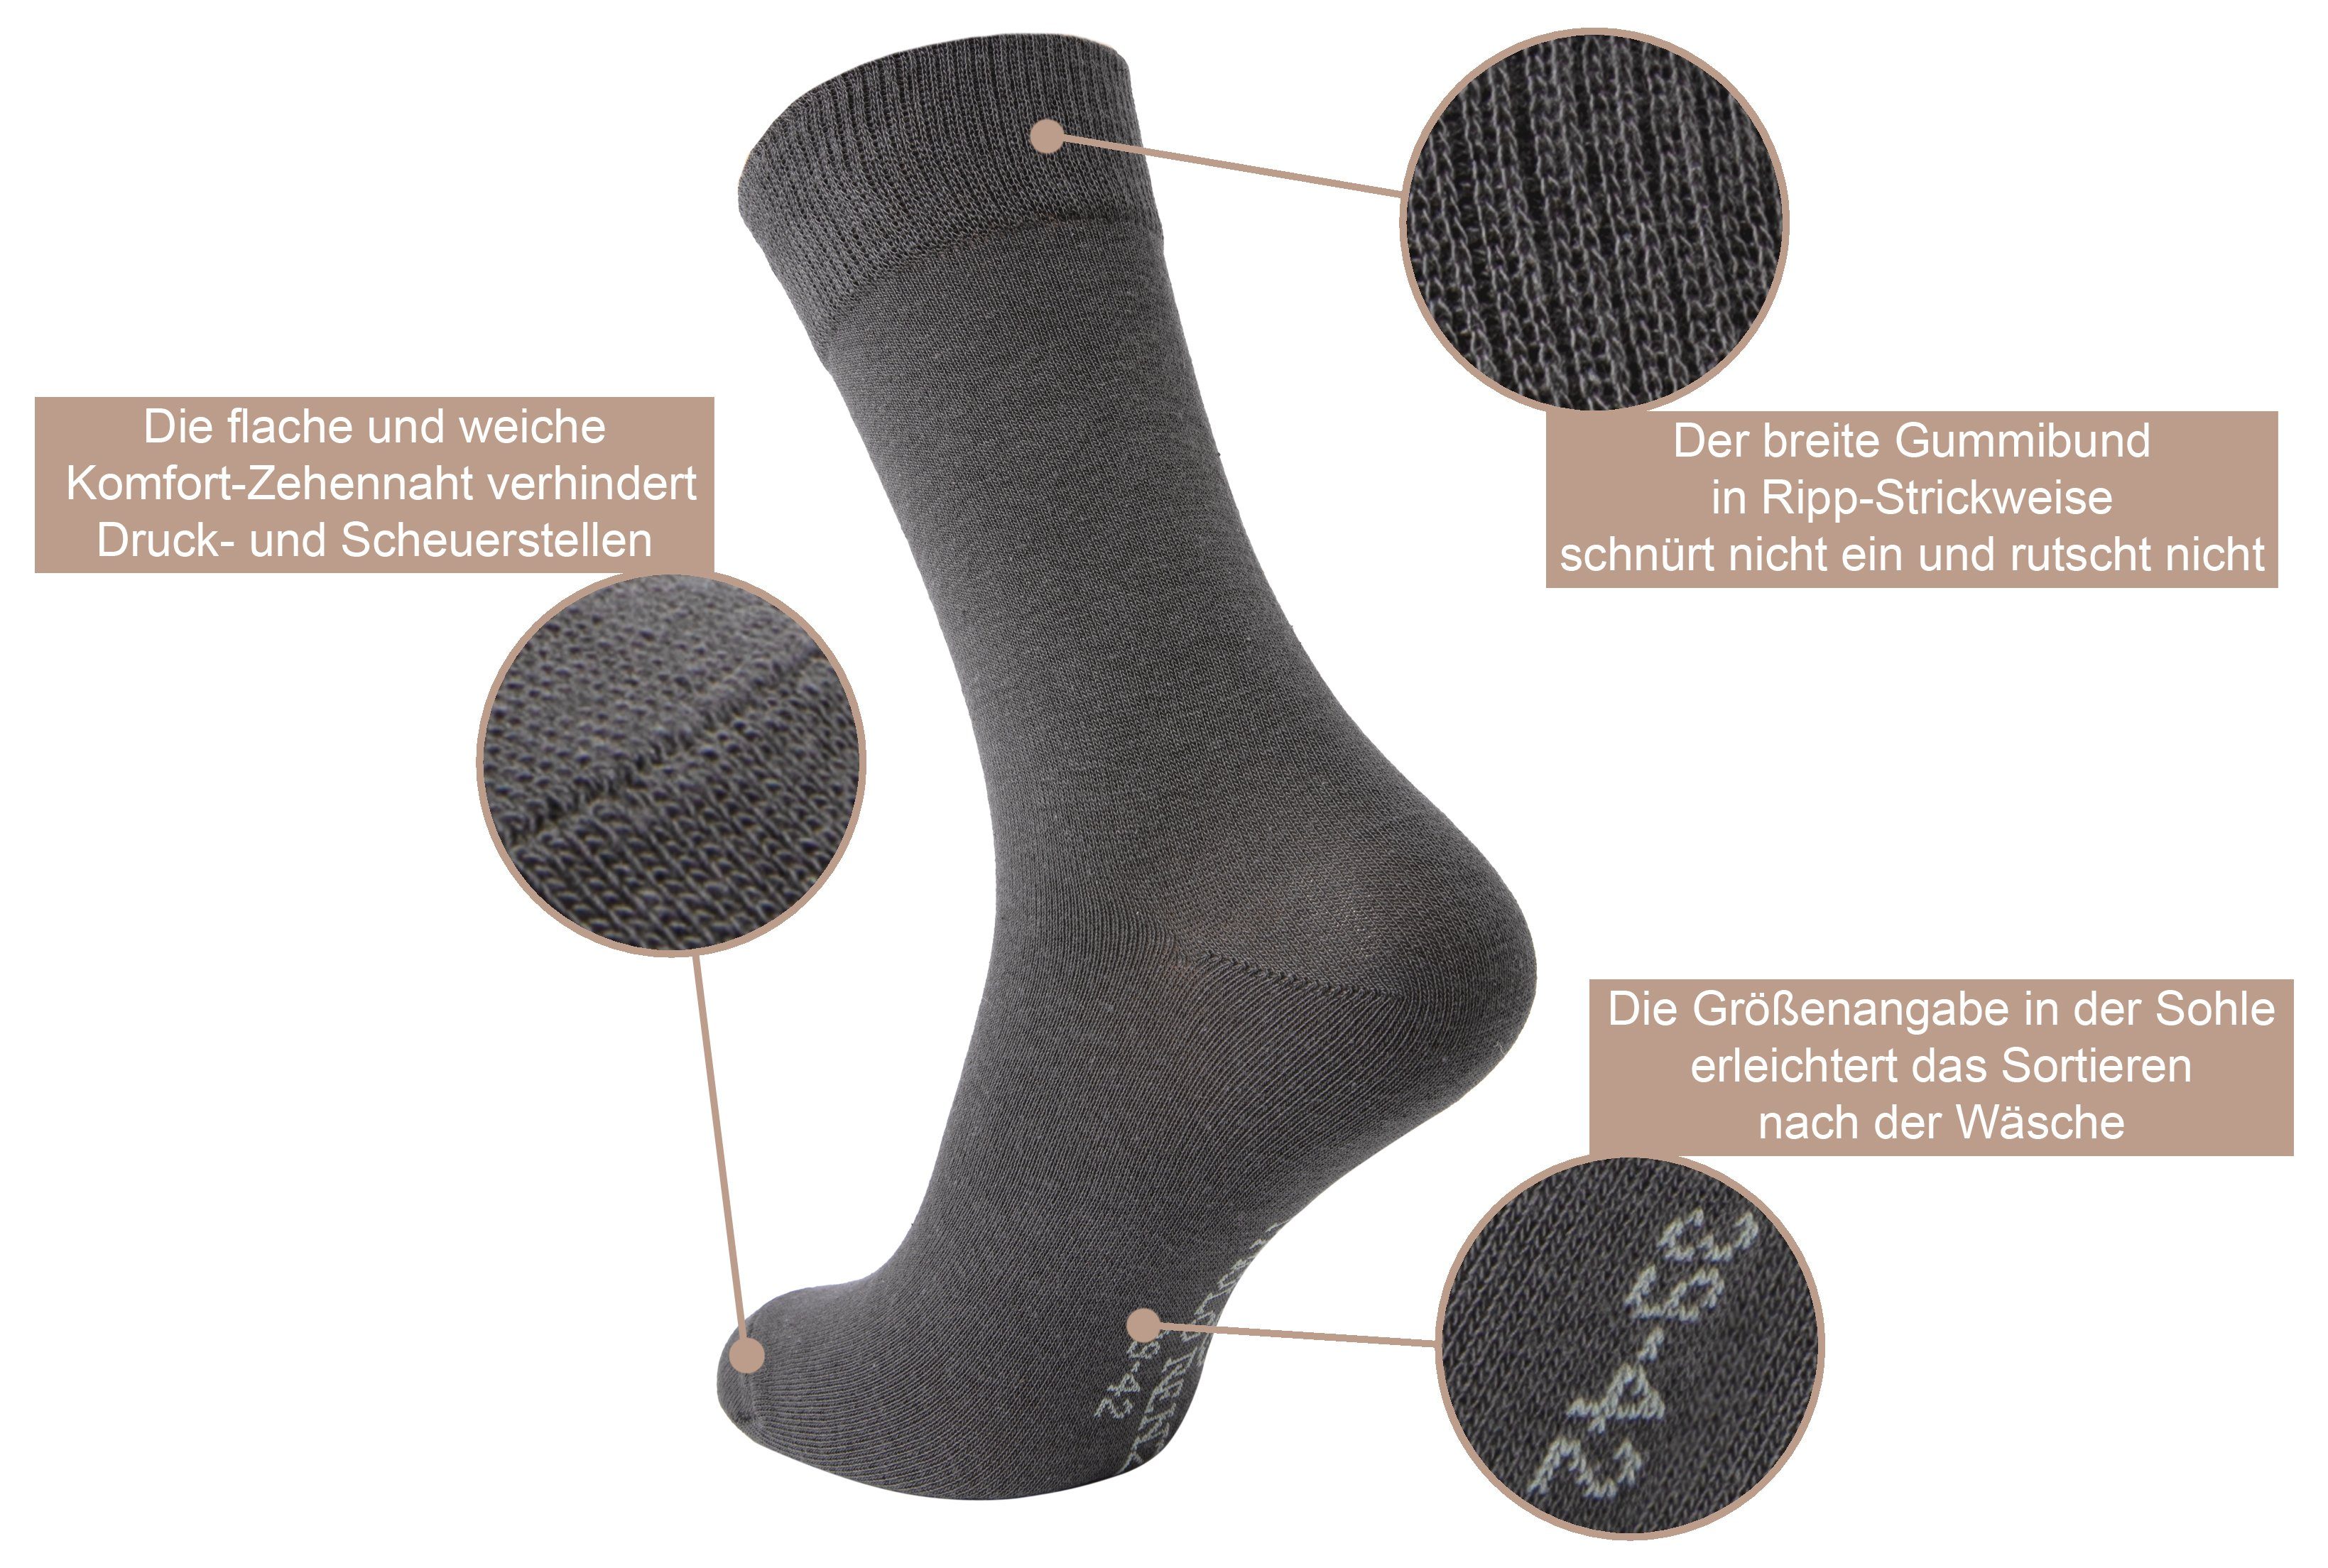 Paolo Renzo Businesssocken (3-Paar) Atmungsaktive Dunkelgrau Baumwolle Herren aus Business Socken hochwertiger